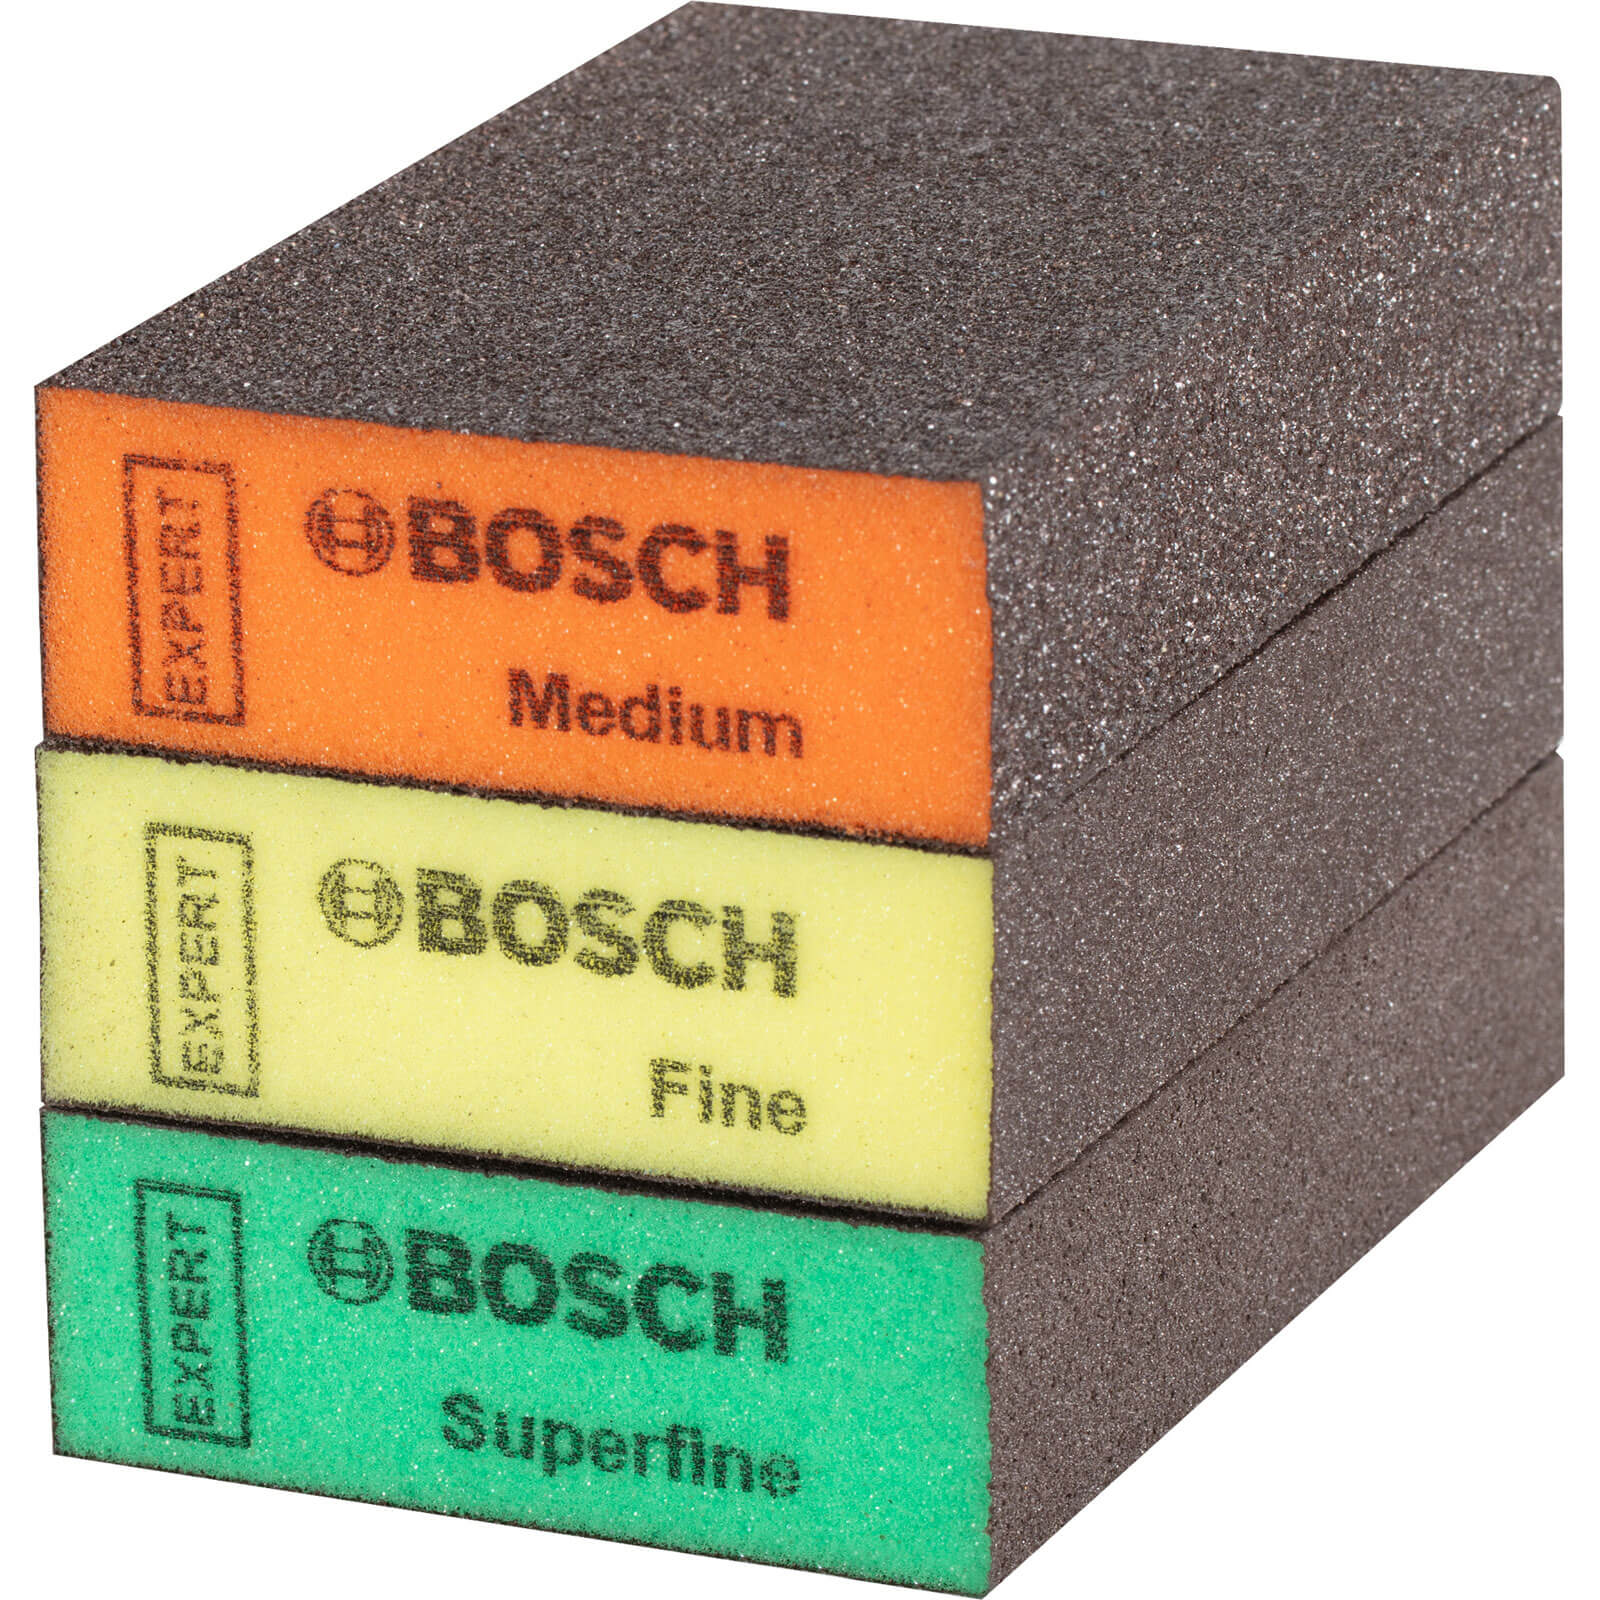 Image of Bosch Expert 3 Piece S471 Sanding Block Set